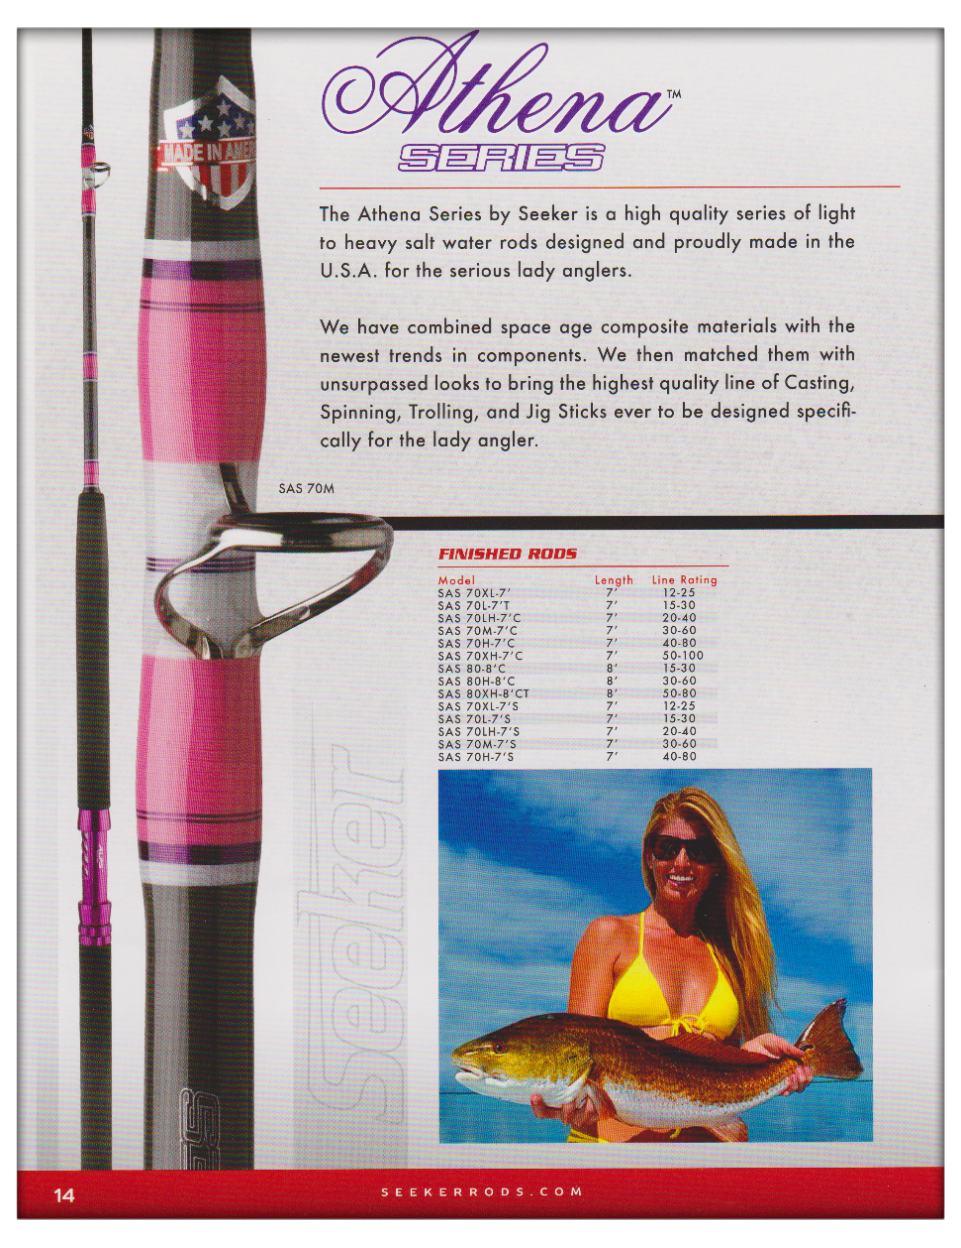 Seeker Rods - Jim's Custom Fishing Rods 661 350-0444